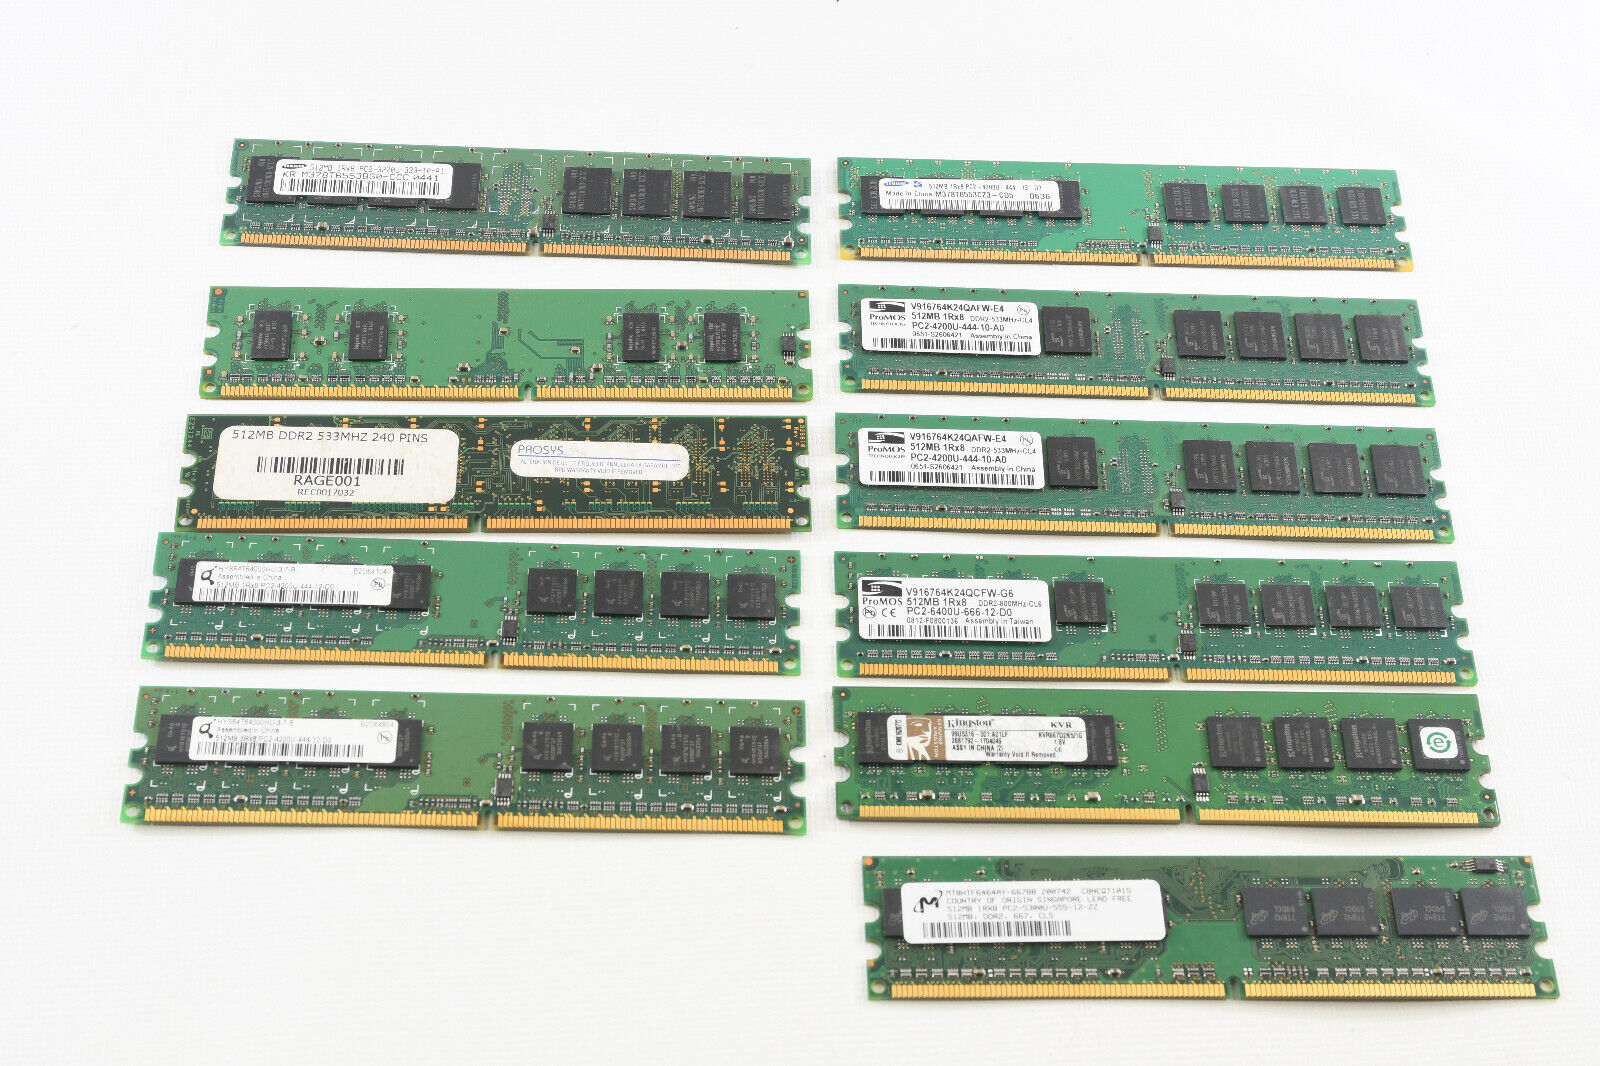 Lot of 11 Assorted RAM Memory Sticks working pulls mixed